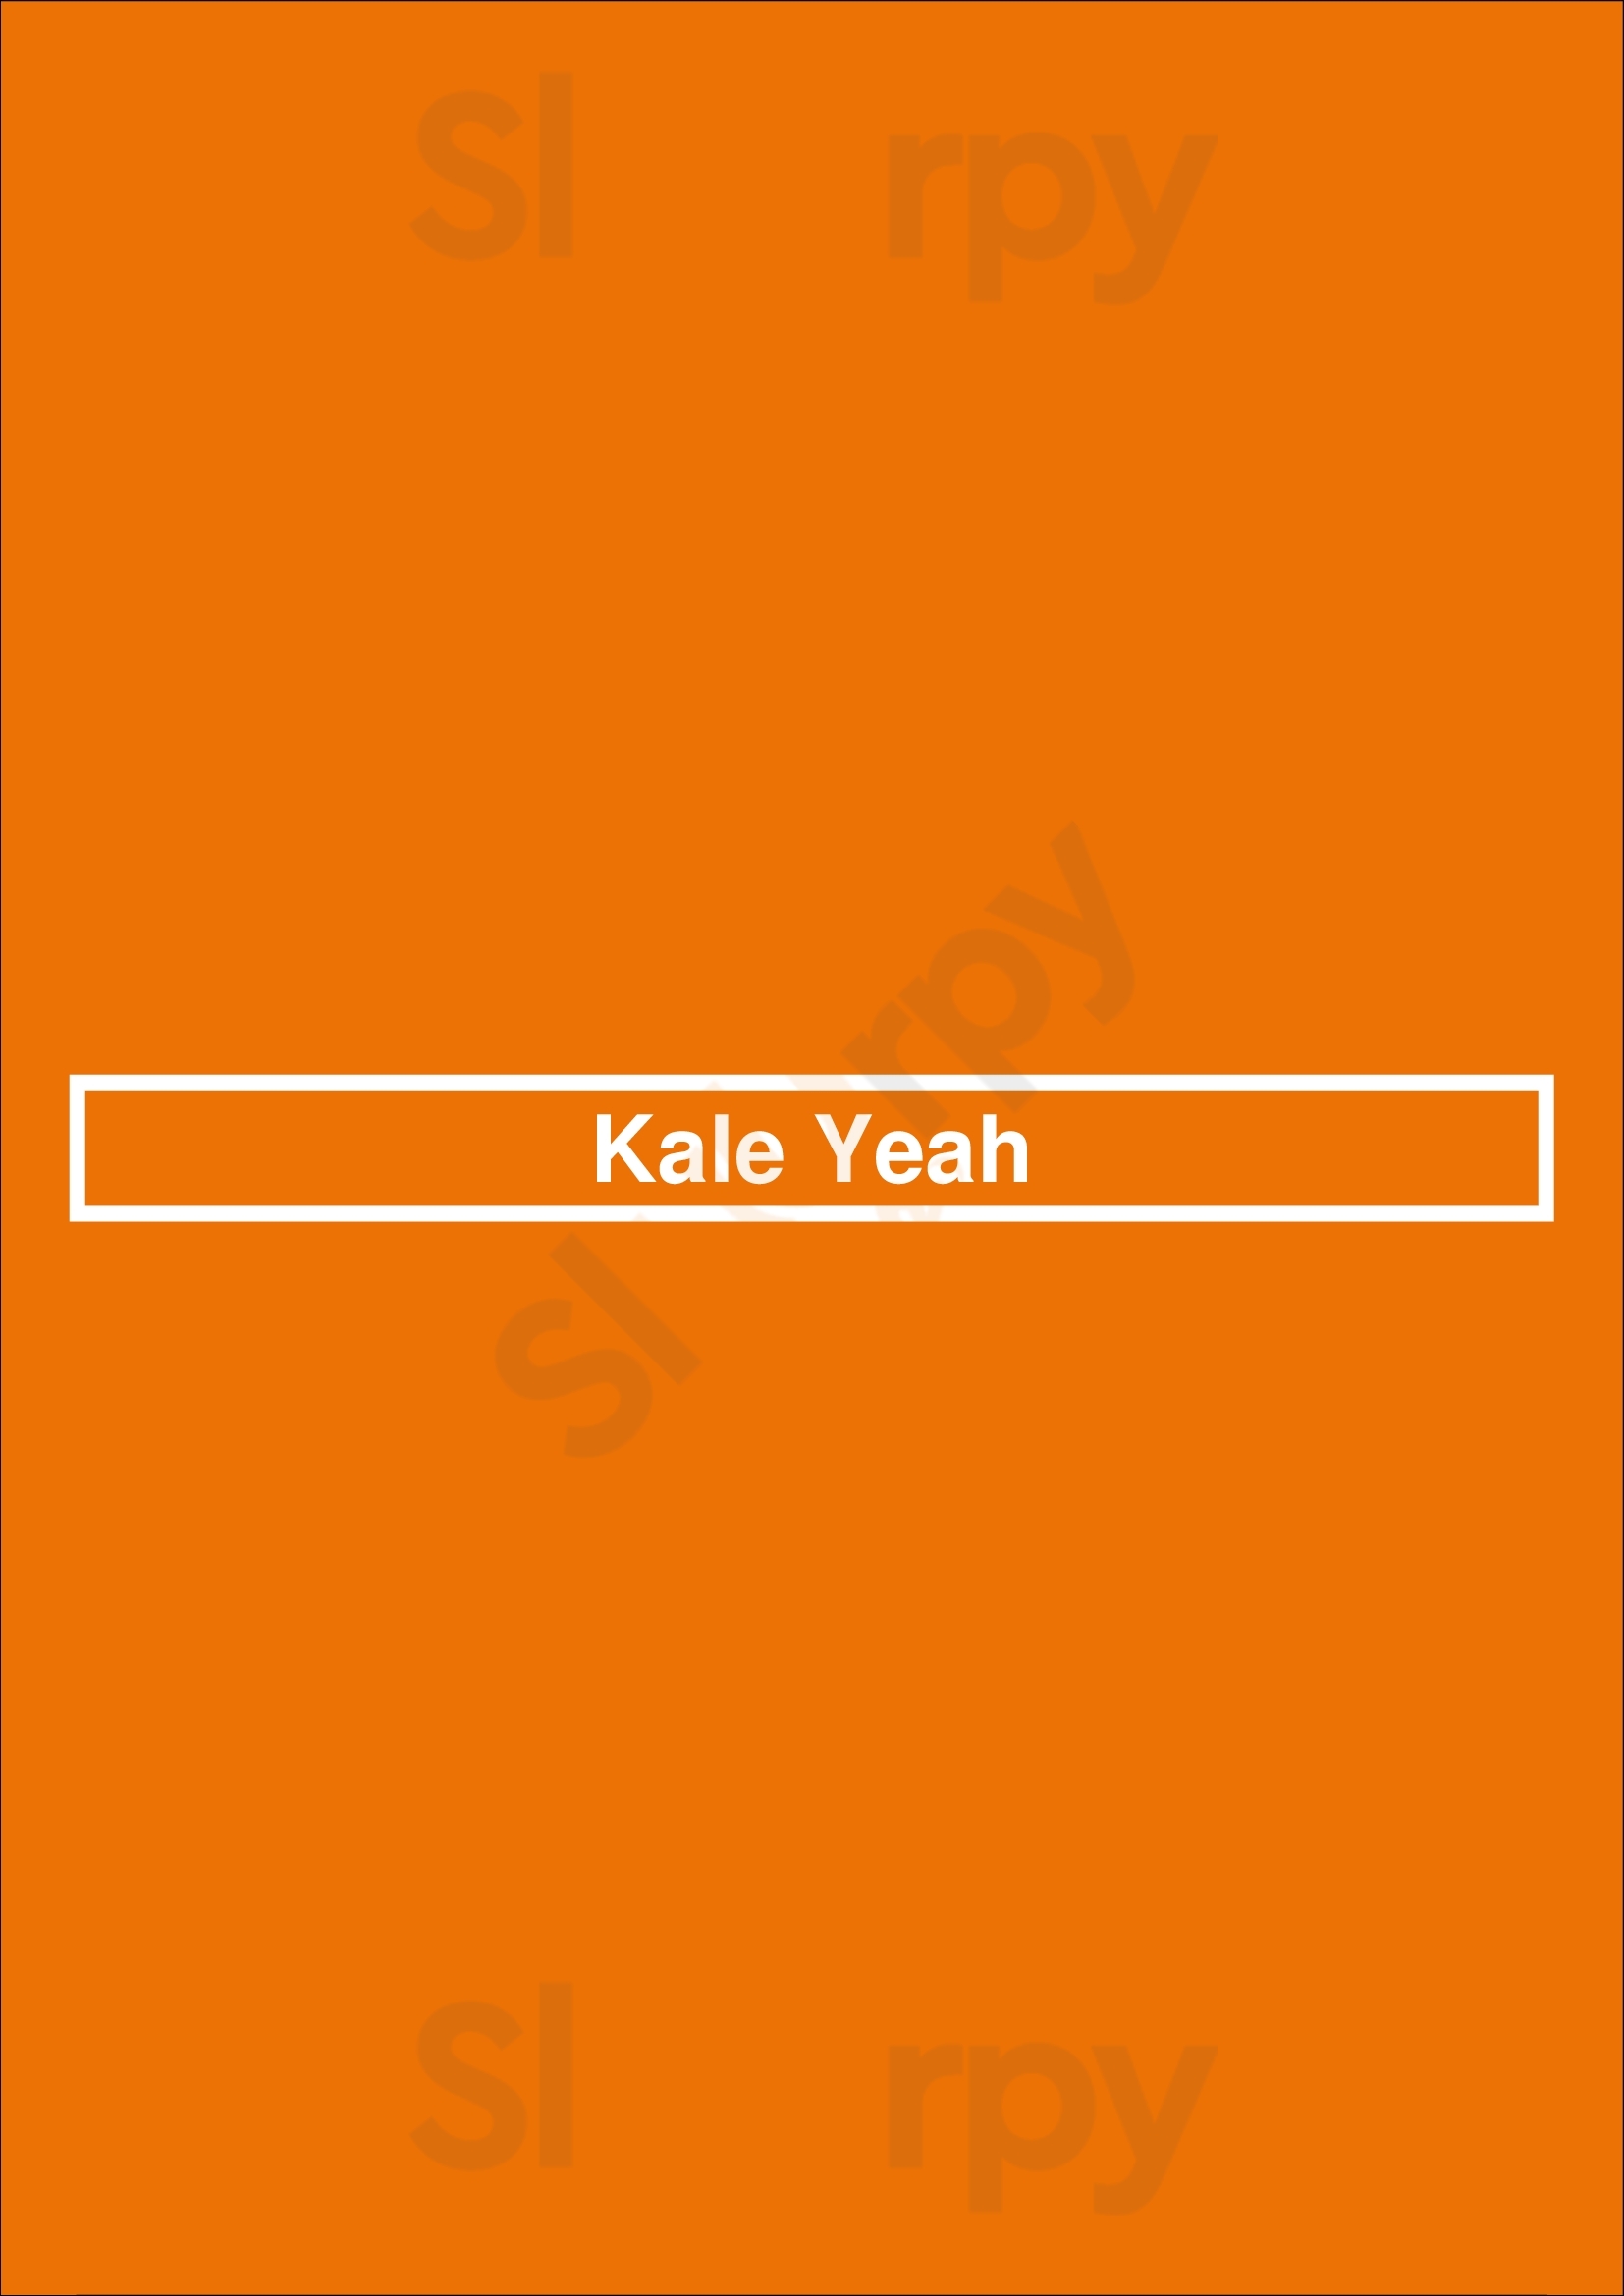 Kale Yeah Philadelphia Menu - 1